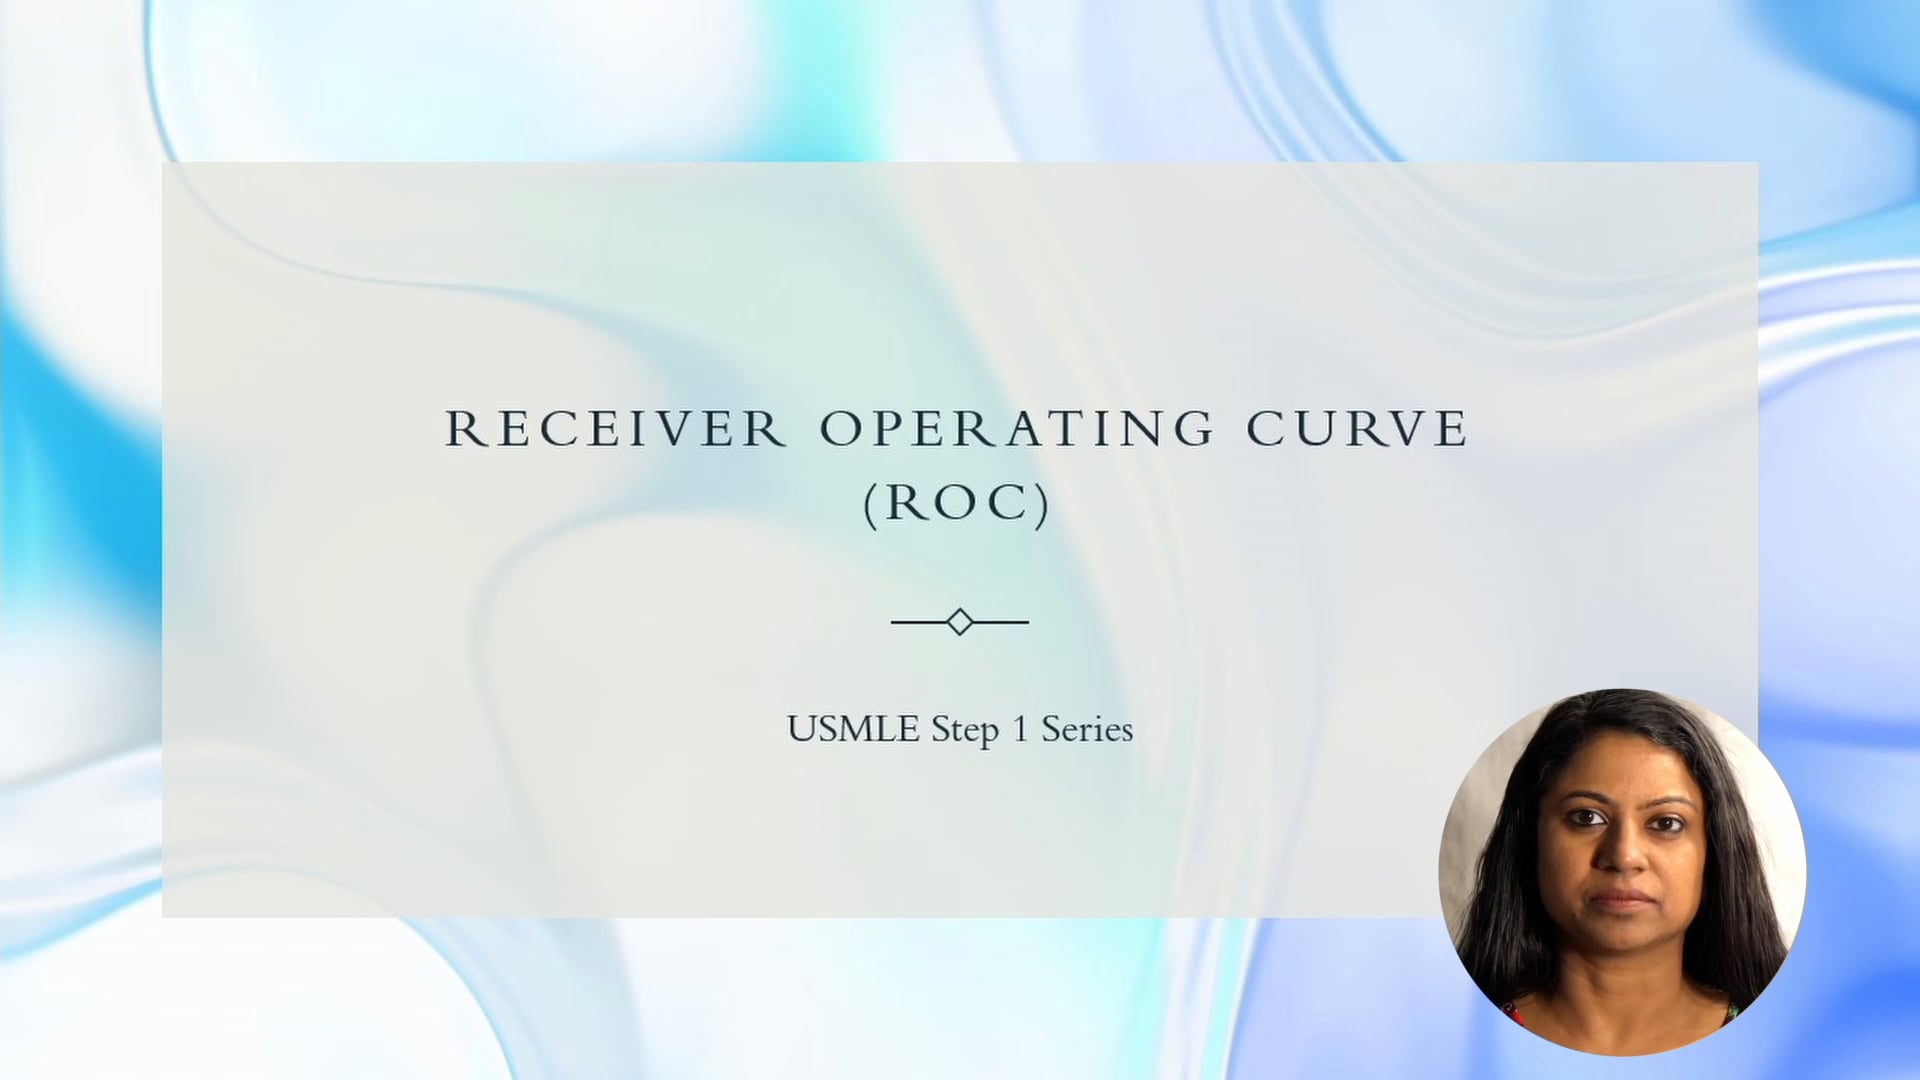 Receiver operator curve